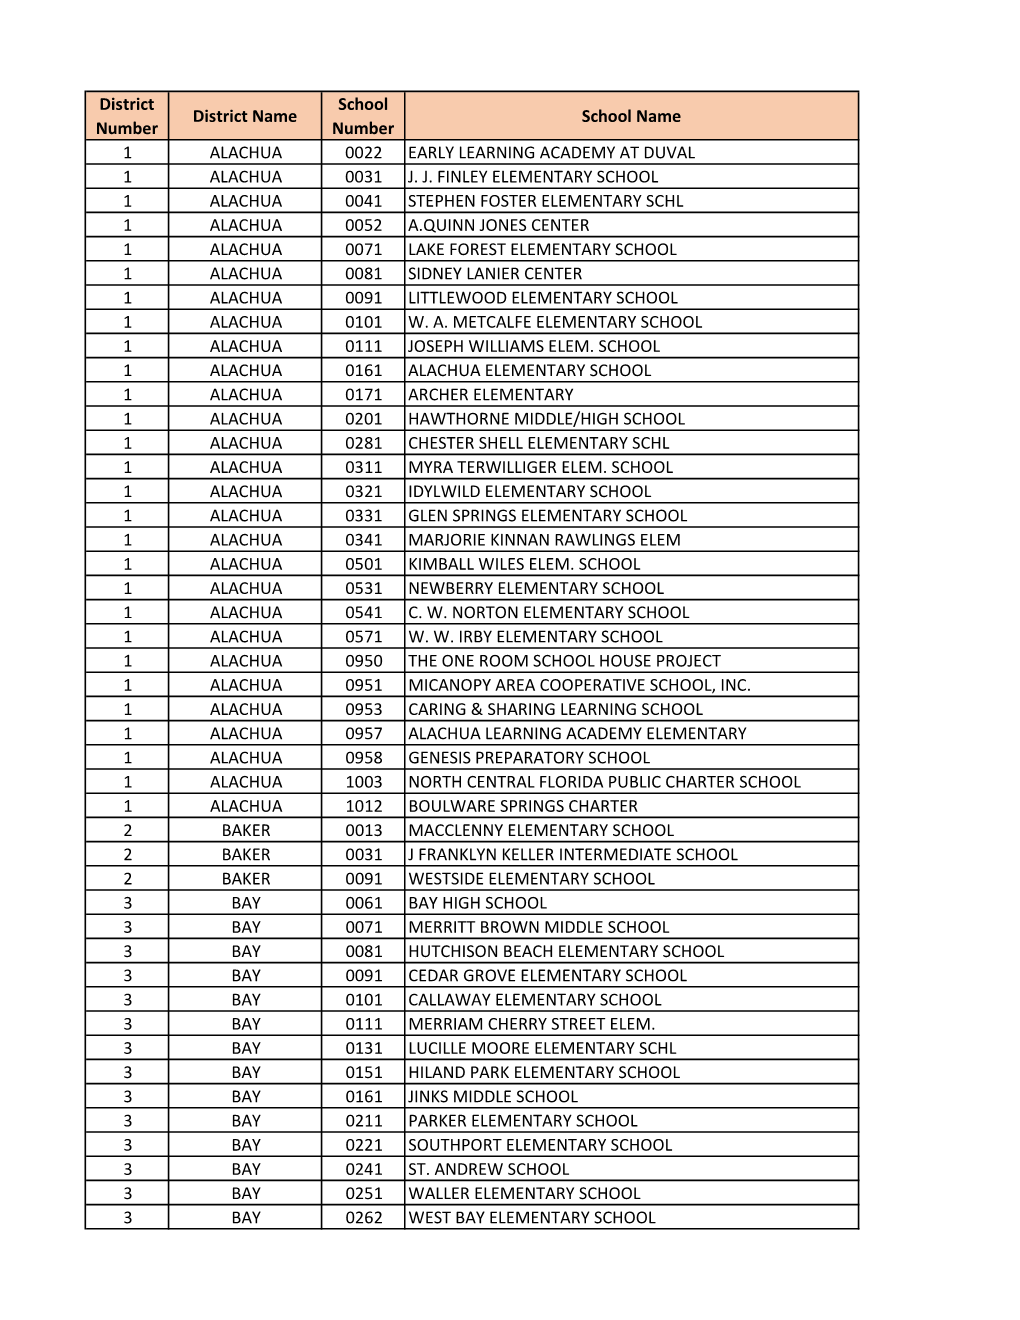 2020-2021 Final Title I School List